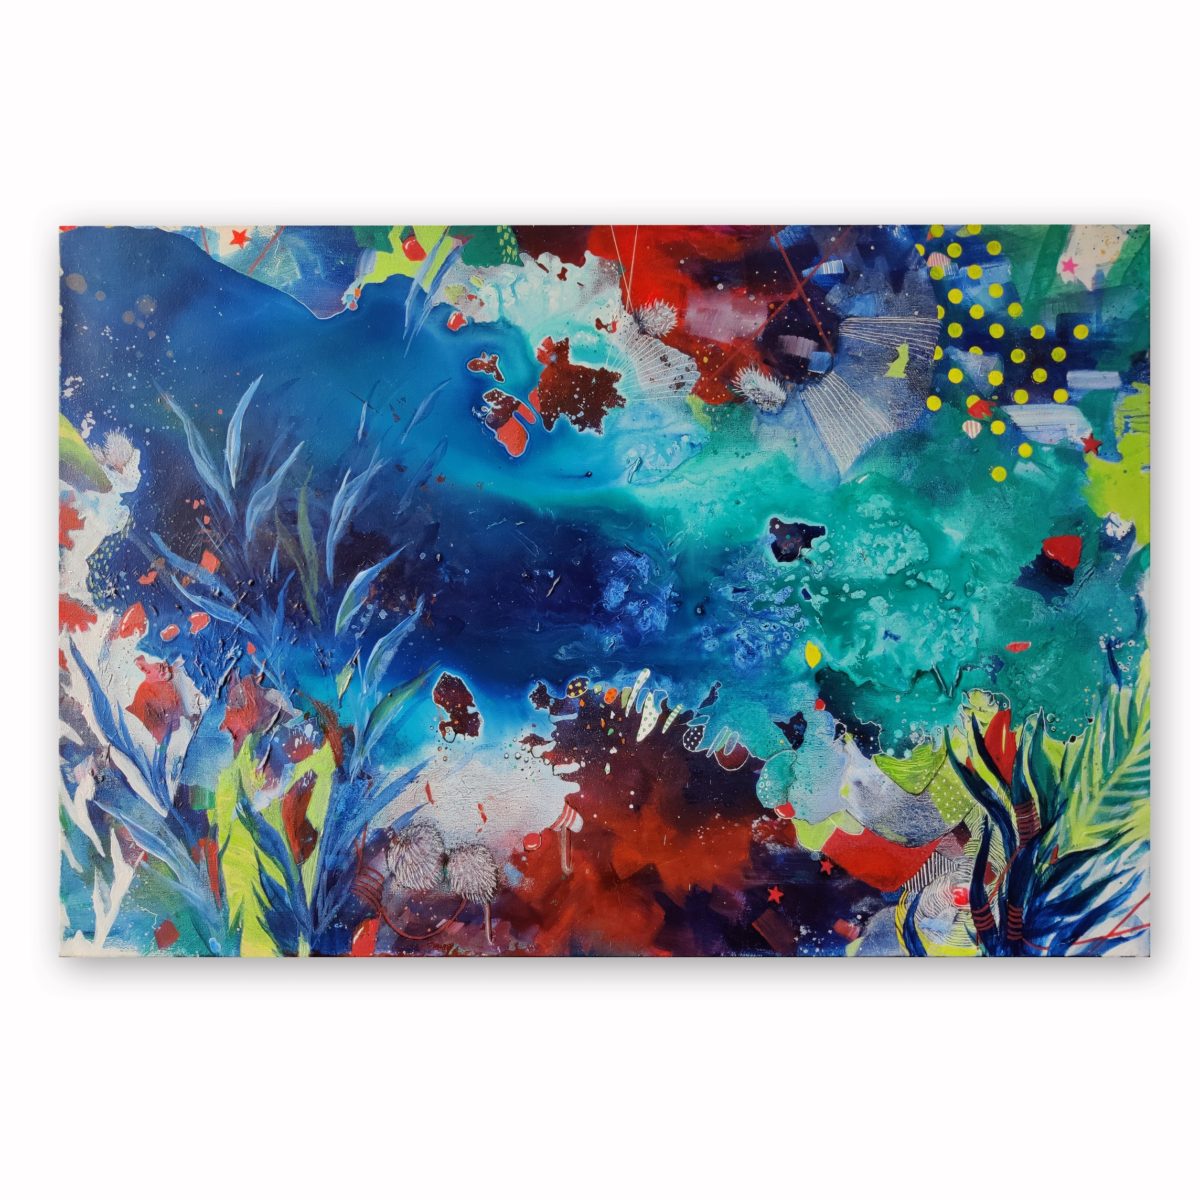 Aquatrails_Acrylic and Ink on Canvas_91.44x60.96cm_2020S